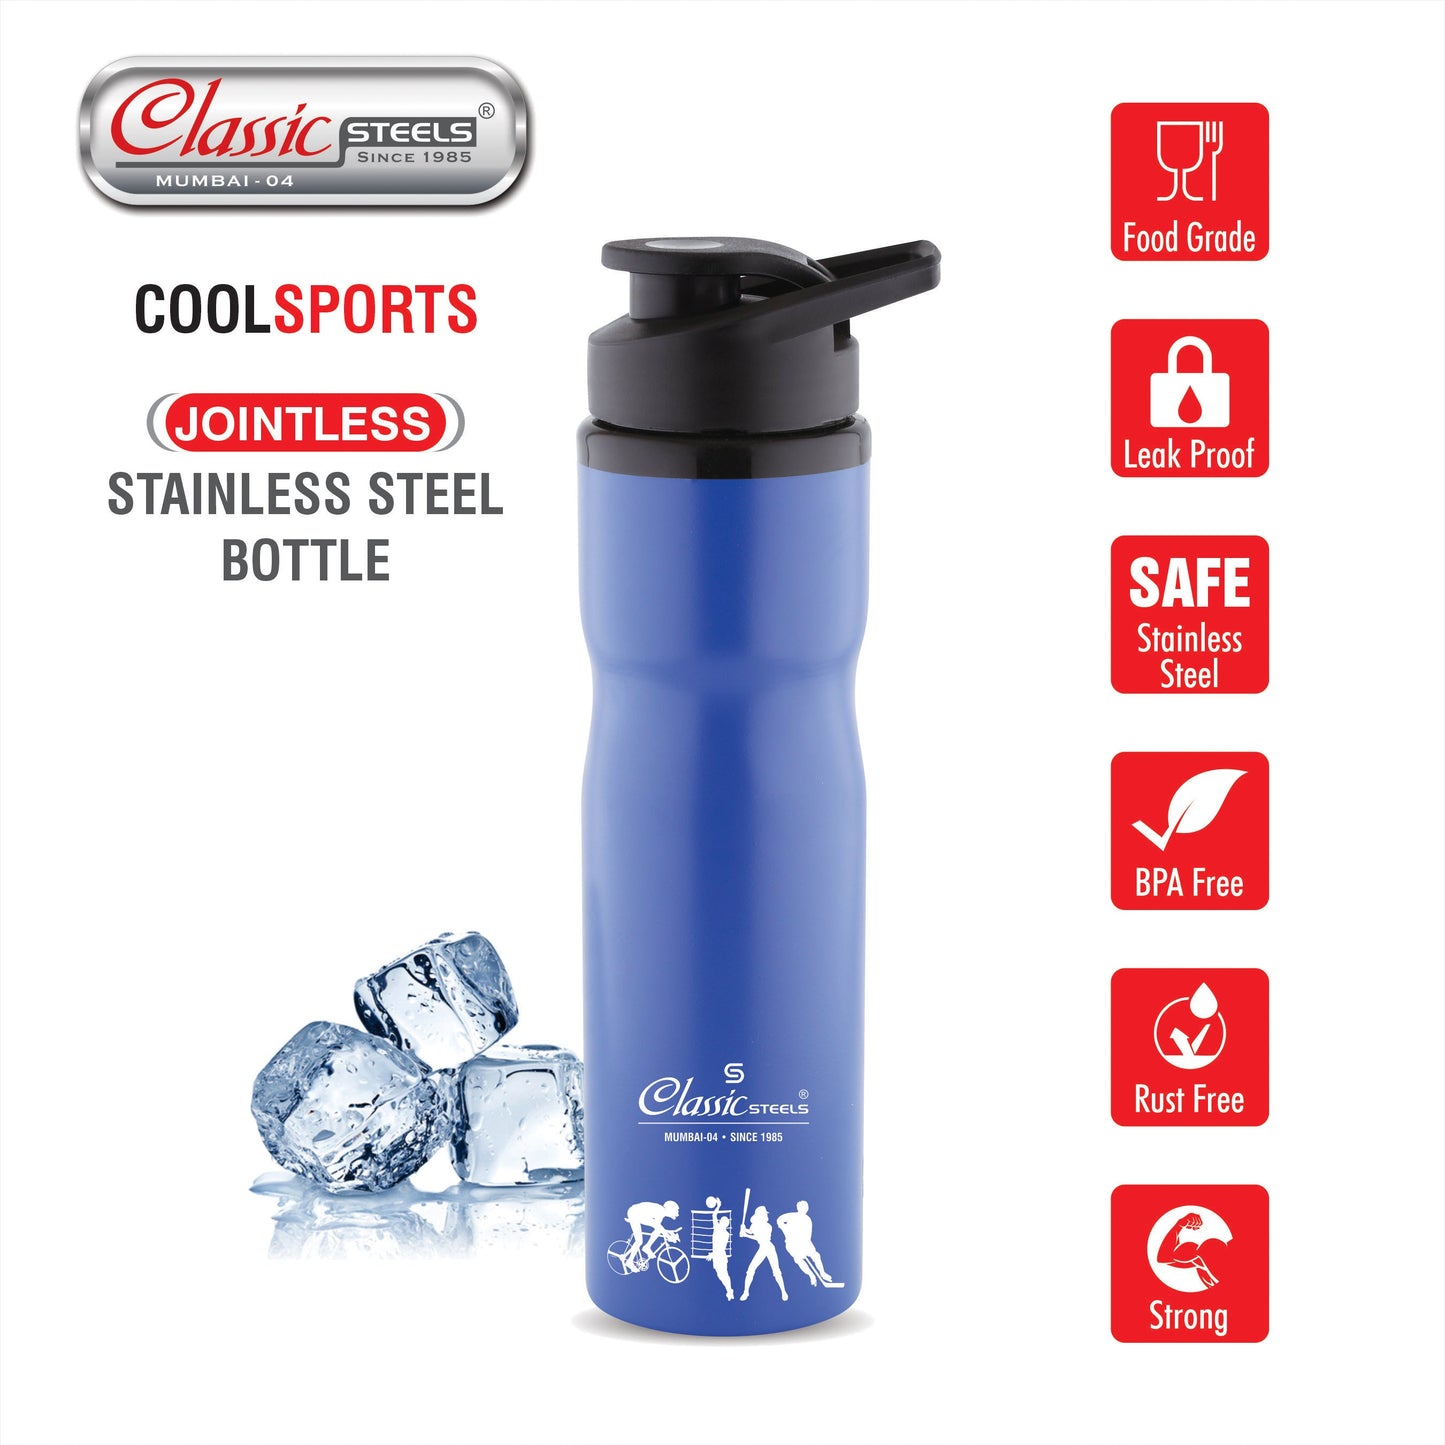 Cool Sports Single Wall Stainless Steel Water Bottle